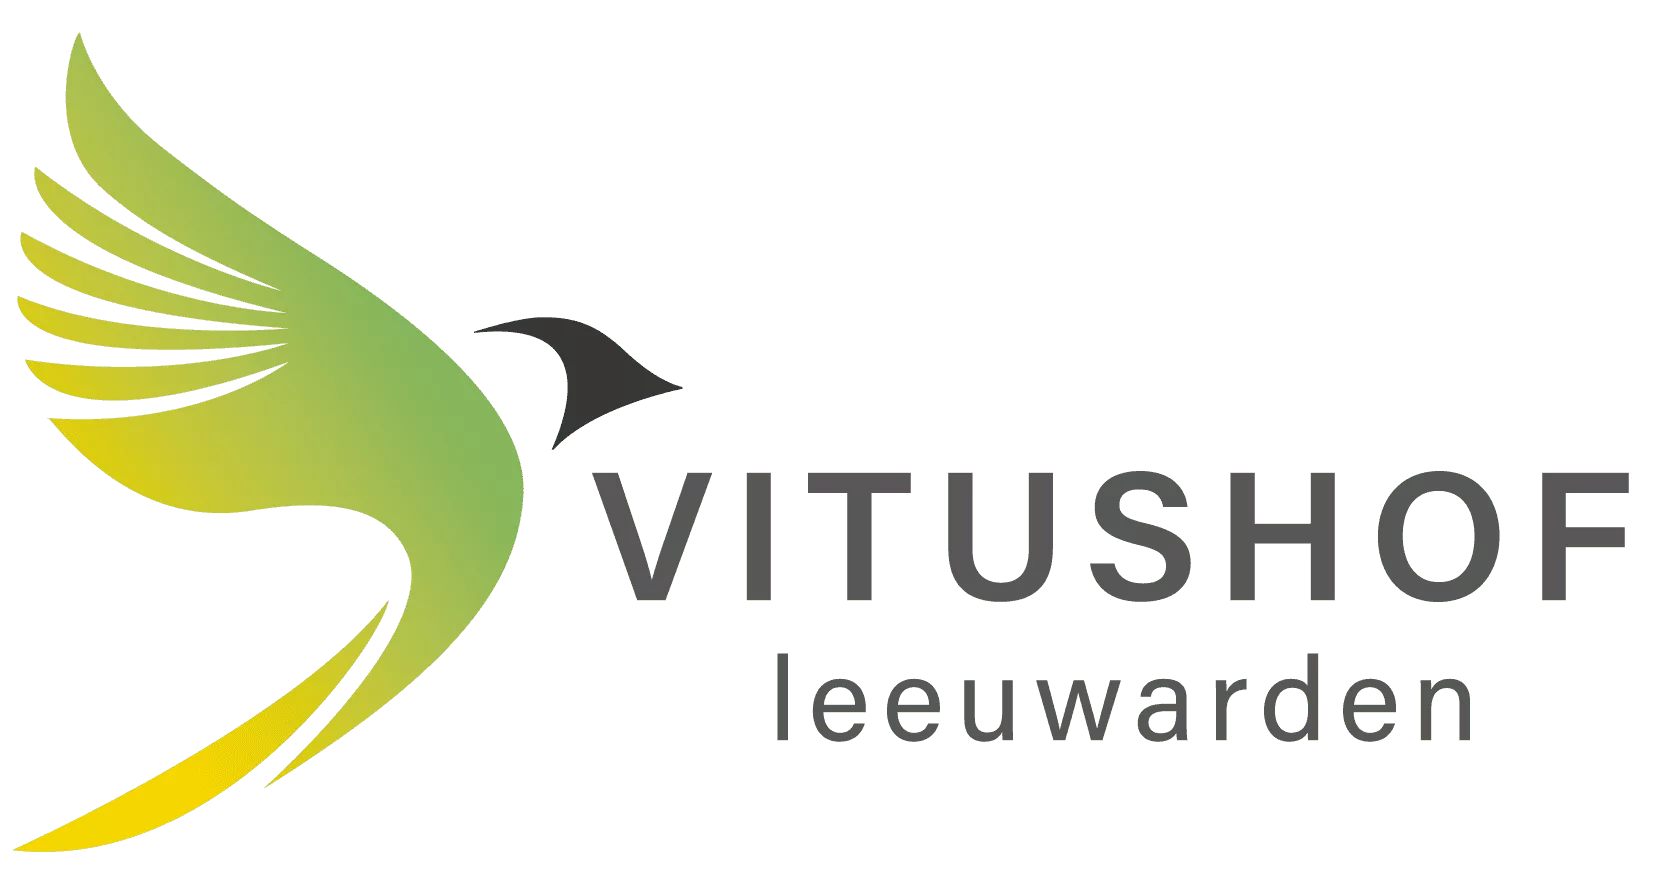 Vitushof Leeuwarden